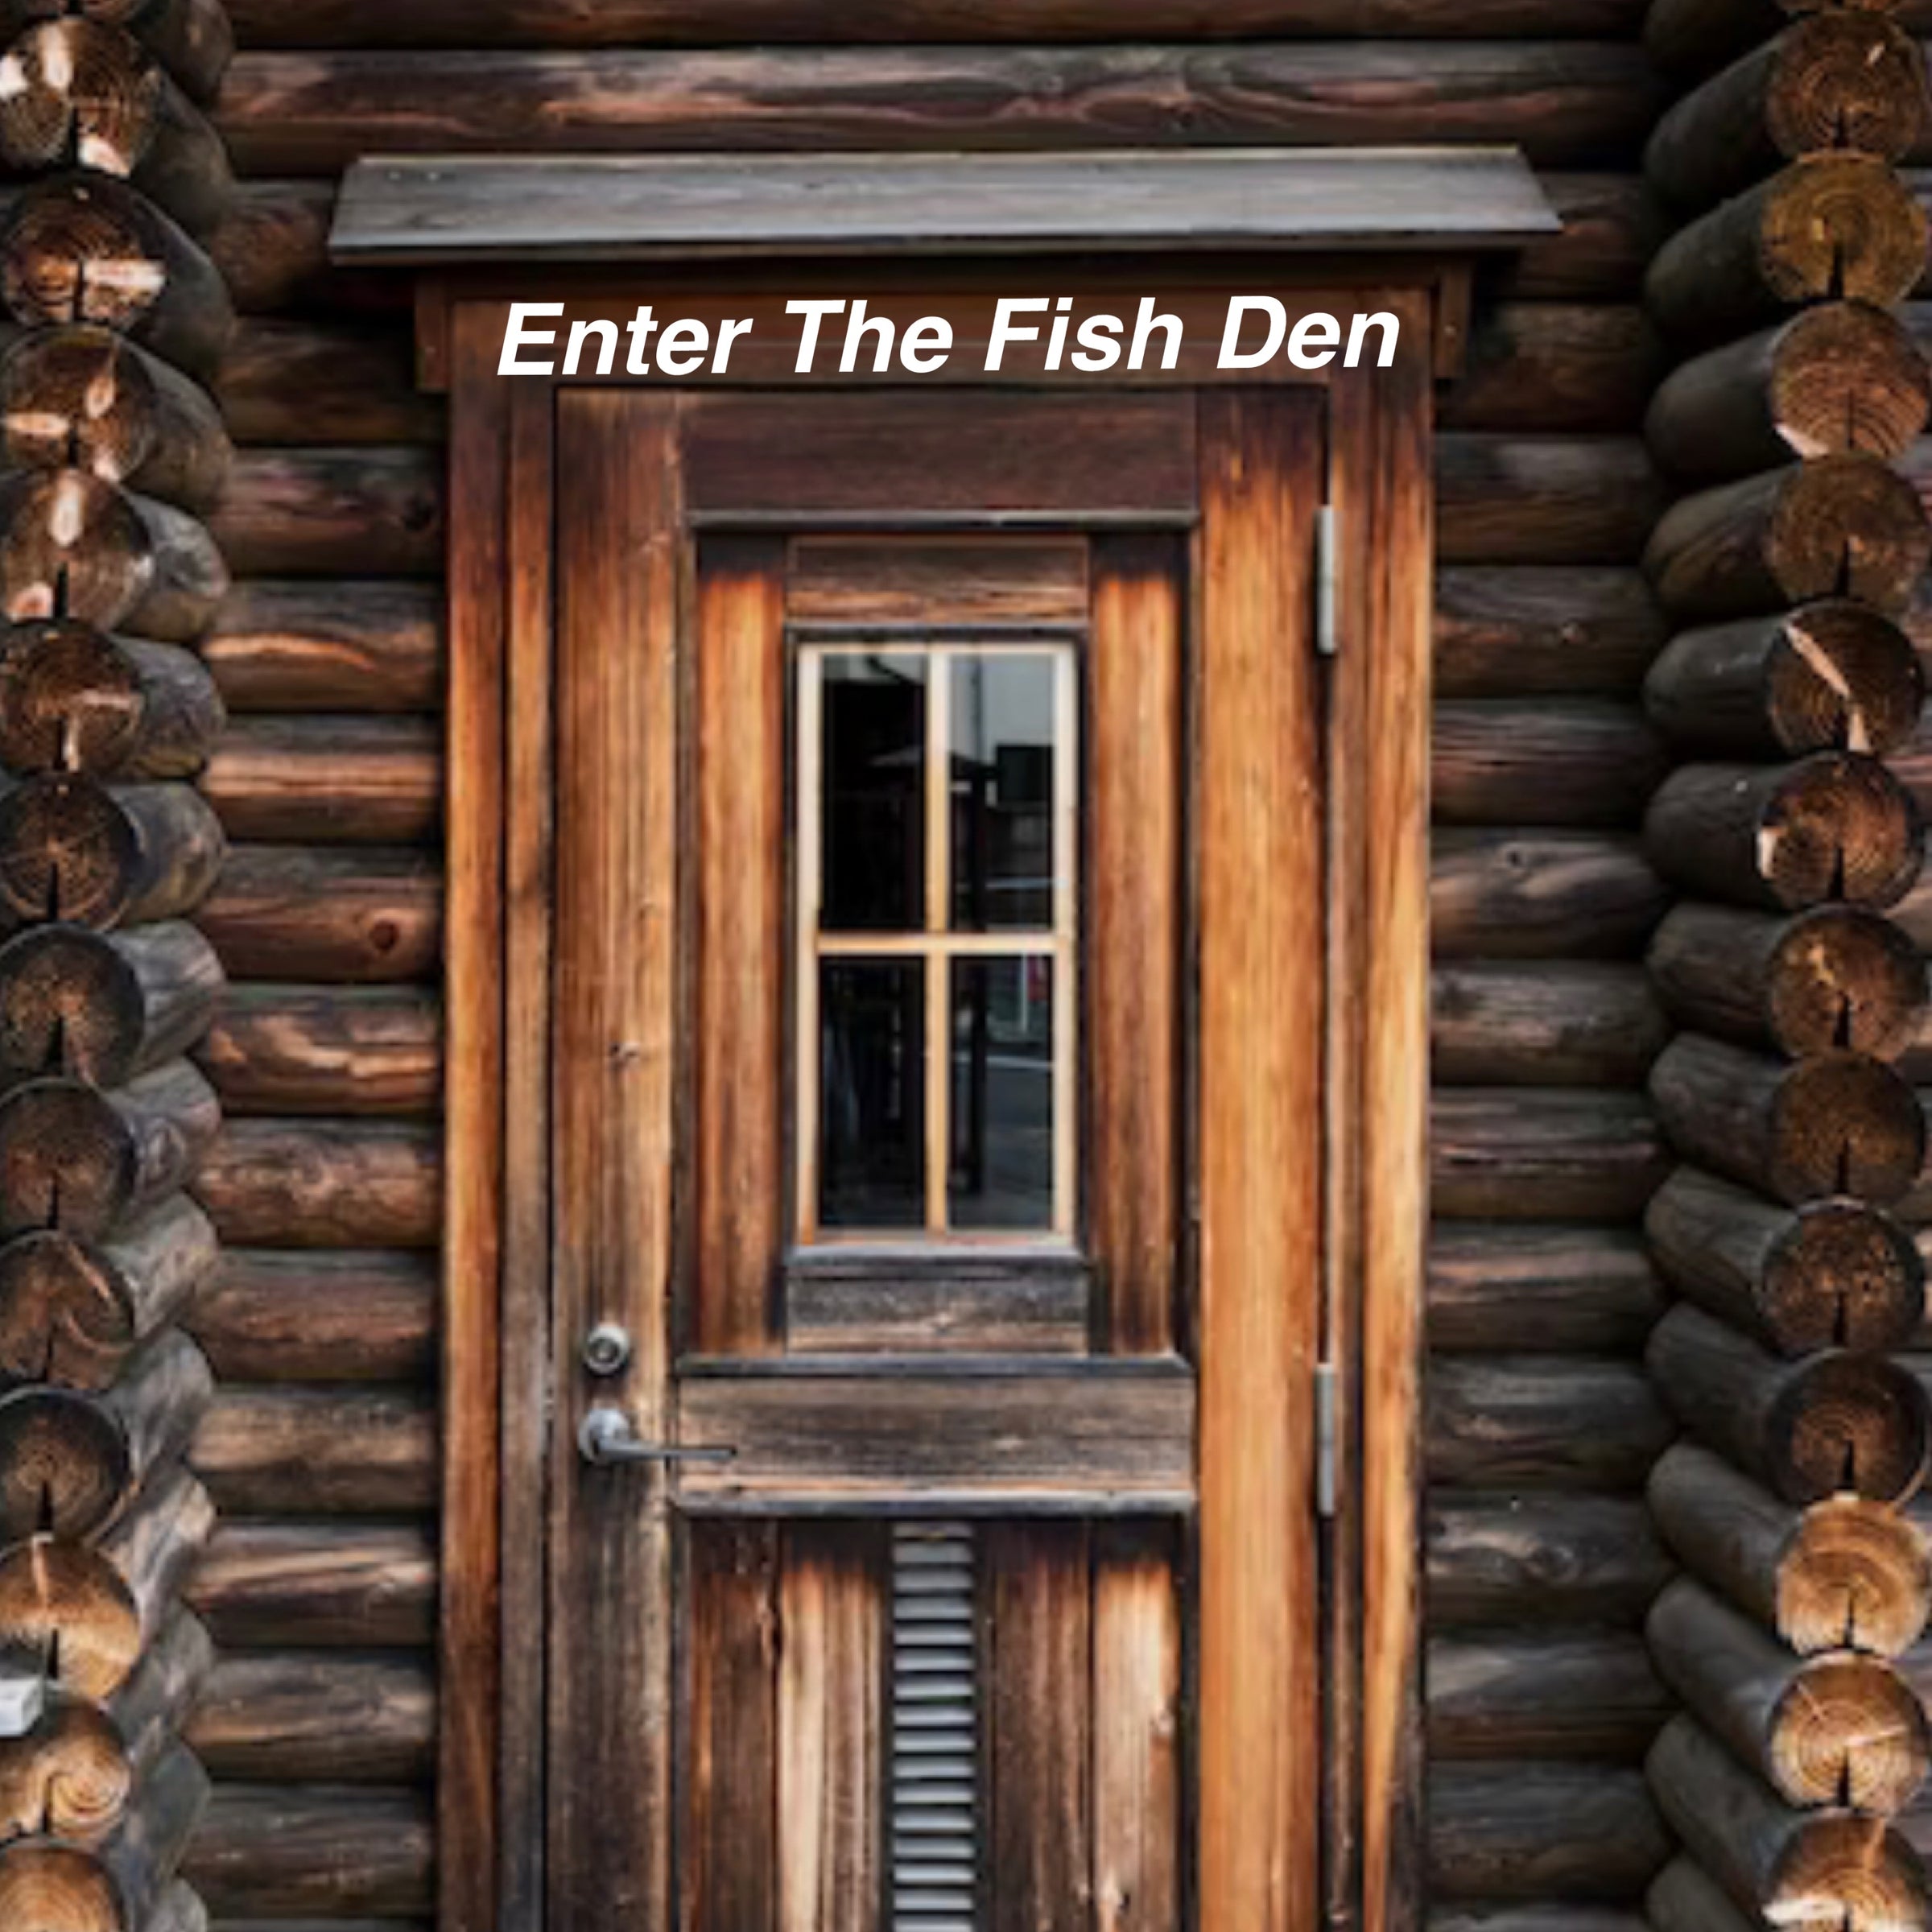 The Fish Den